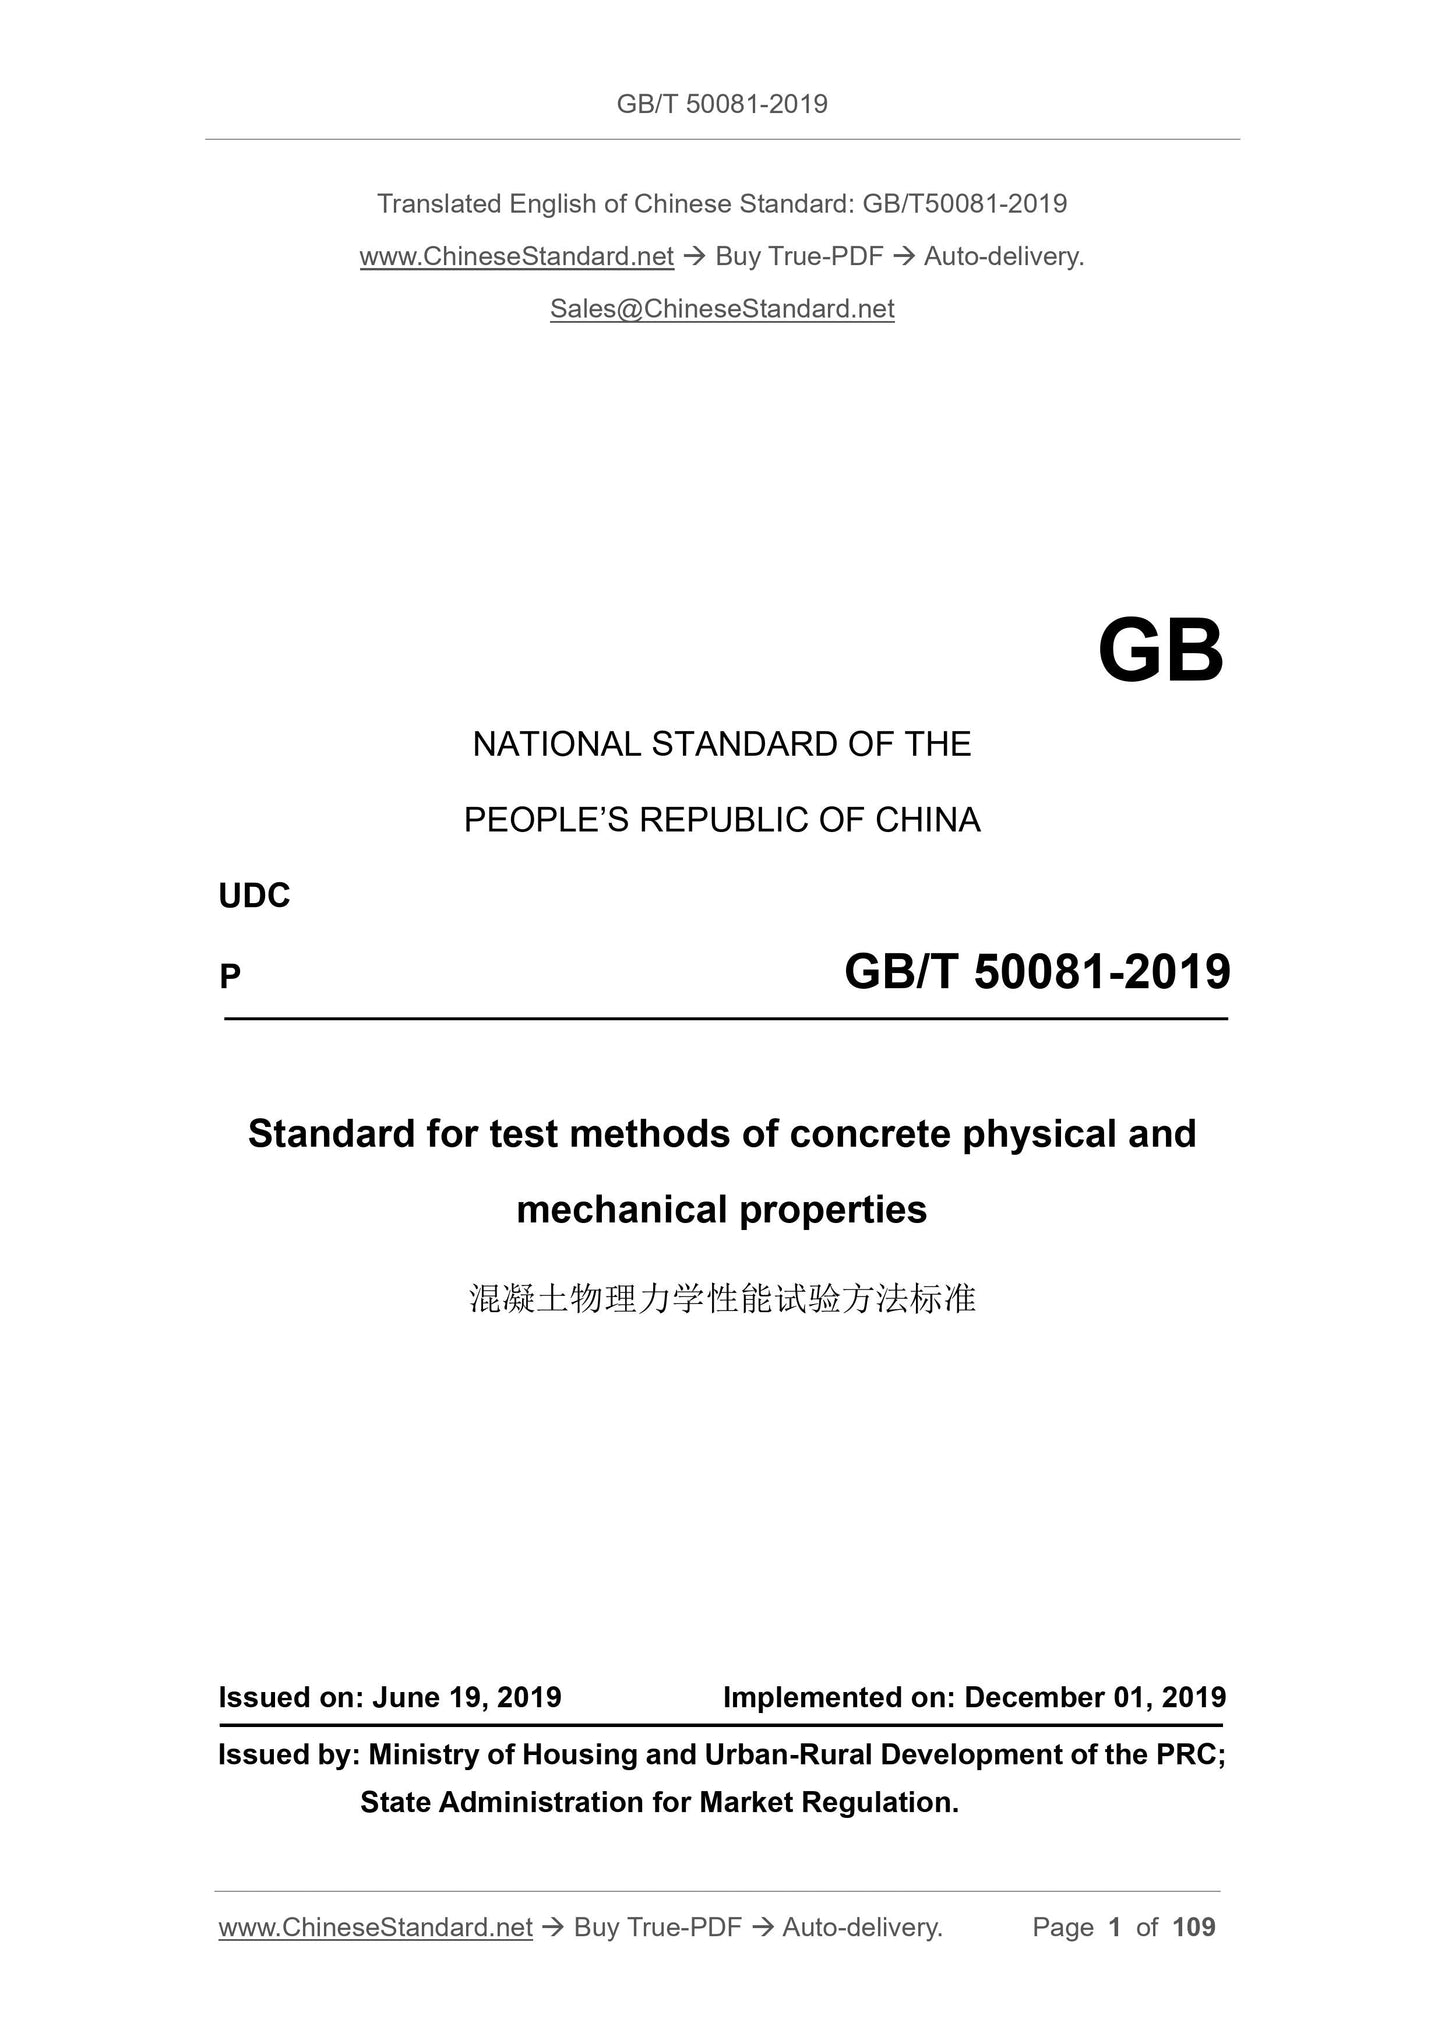 GBT50081-2019 Page 1